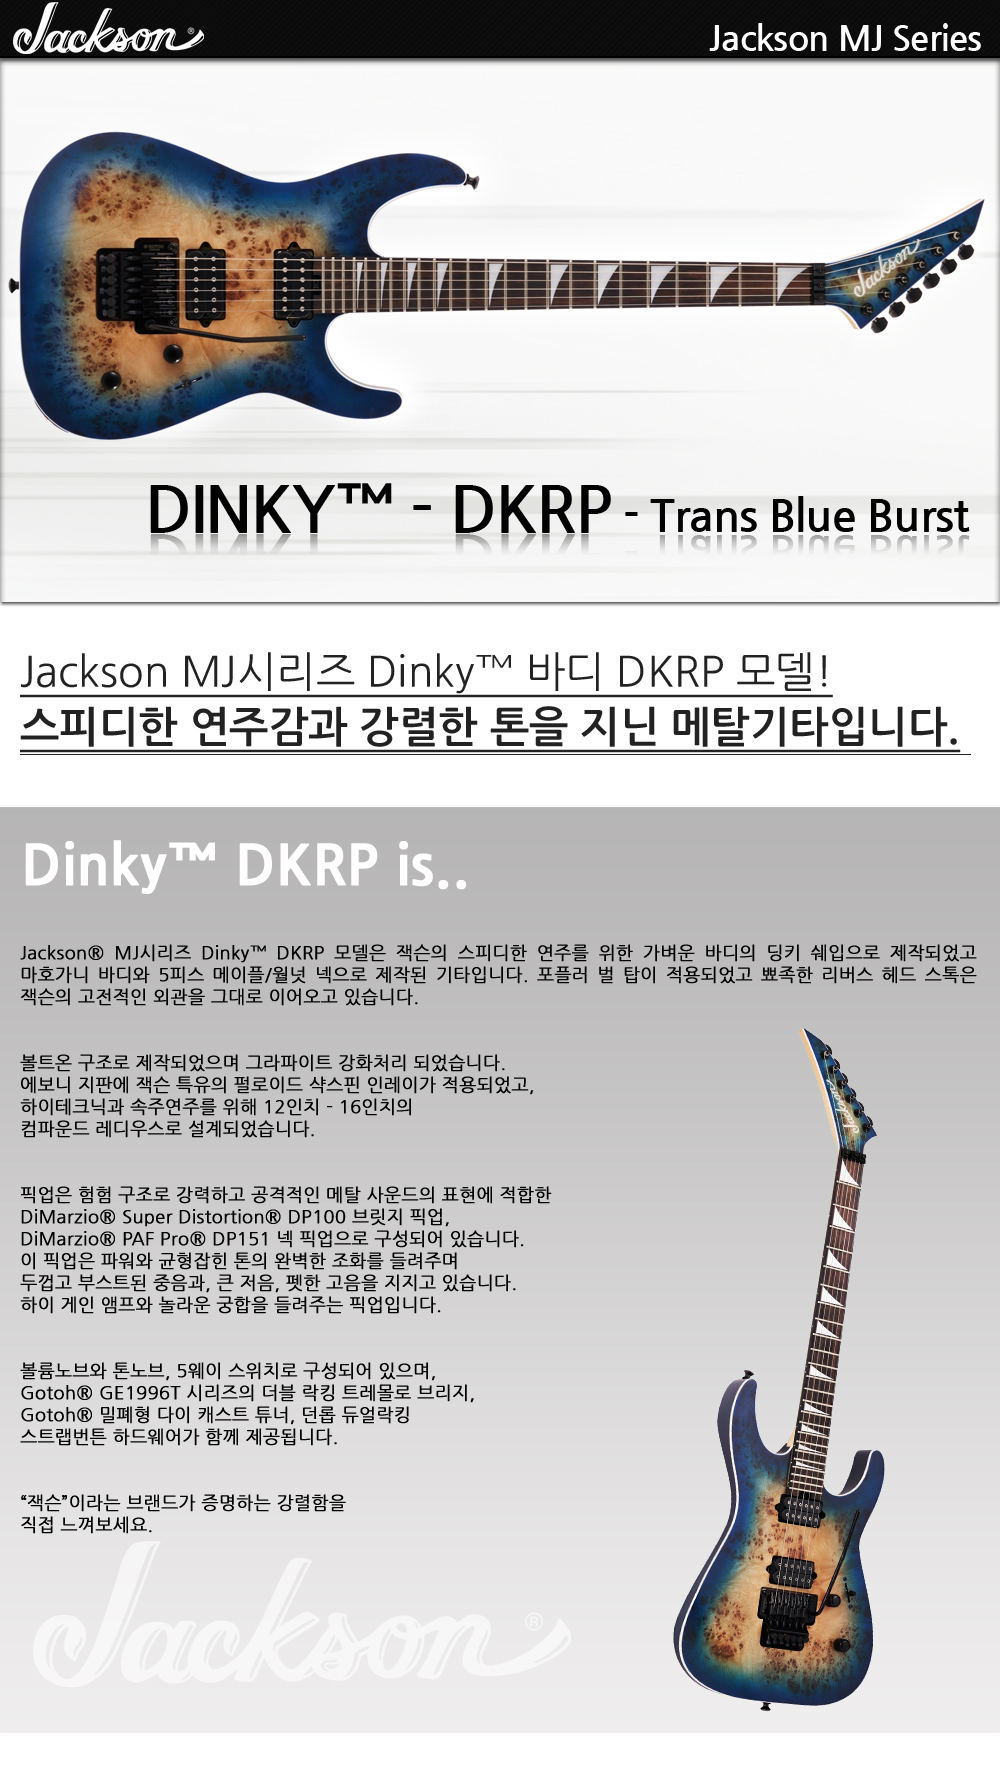 Jackson-MJ-Dinky-DKRP-TransBlueBurst_1_172413.jpg